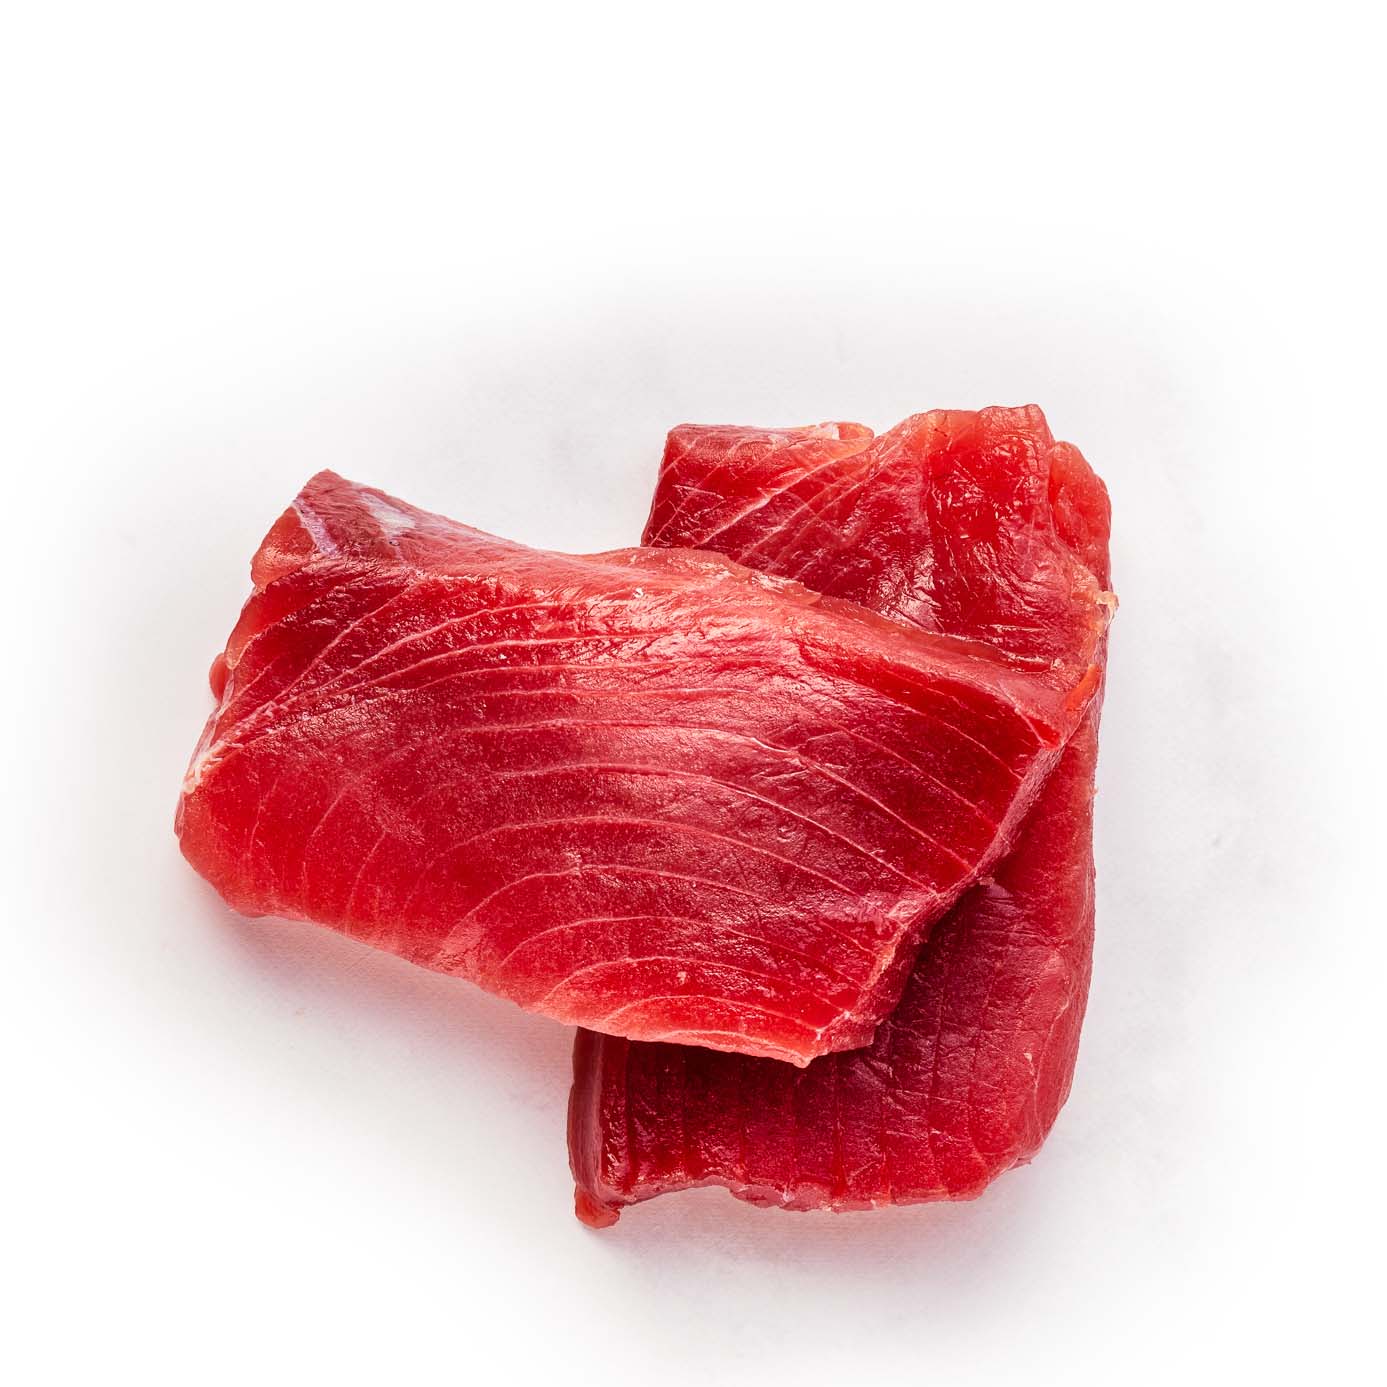 Yellowfin Tuna Steaks from Steve Costi seafood